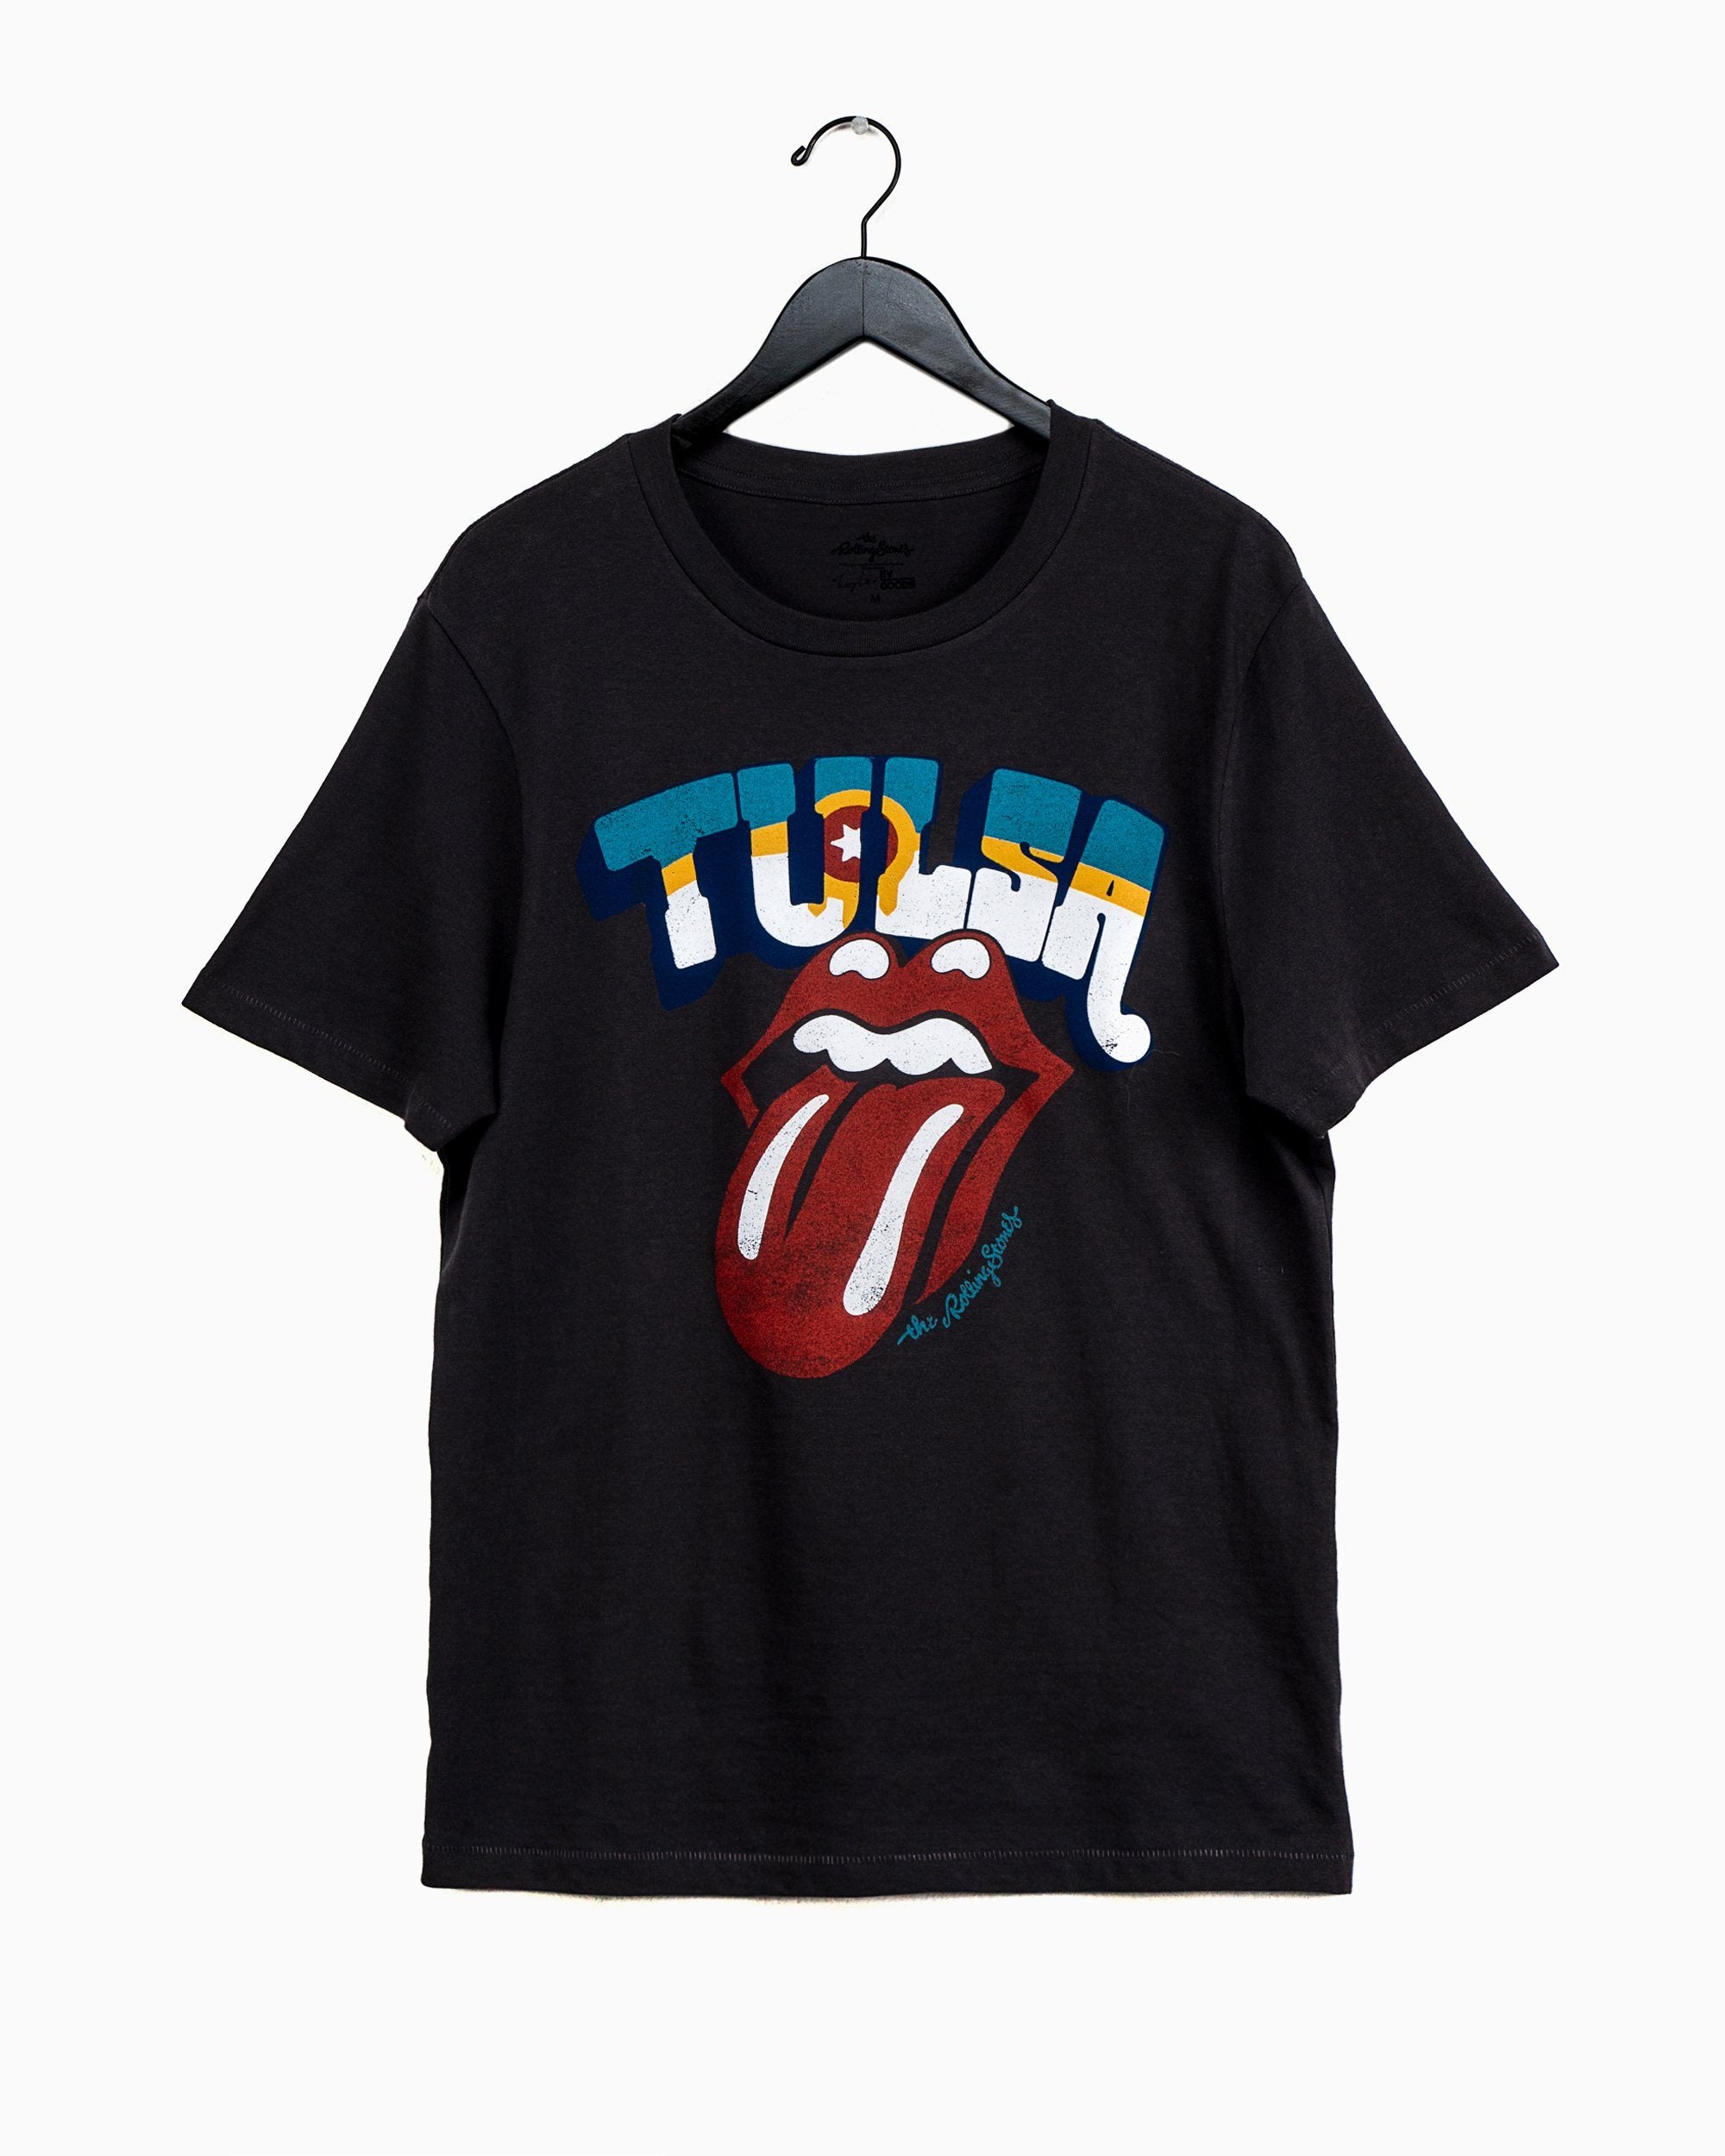 Rolling Stones Tulsa Flag Rocker Off Black Tee (4462500905063)